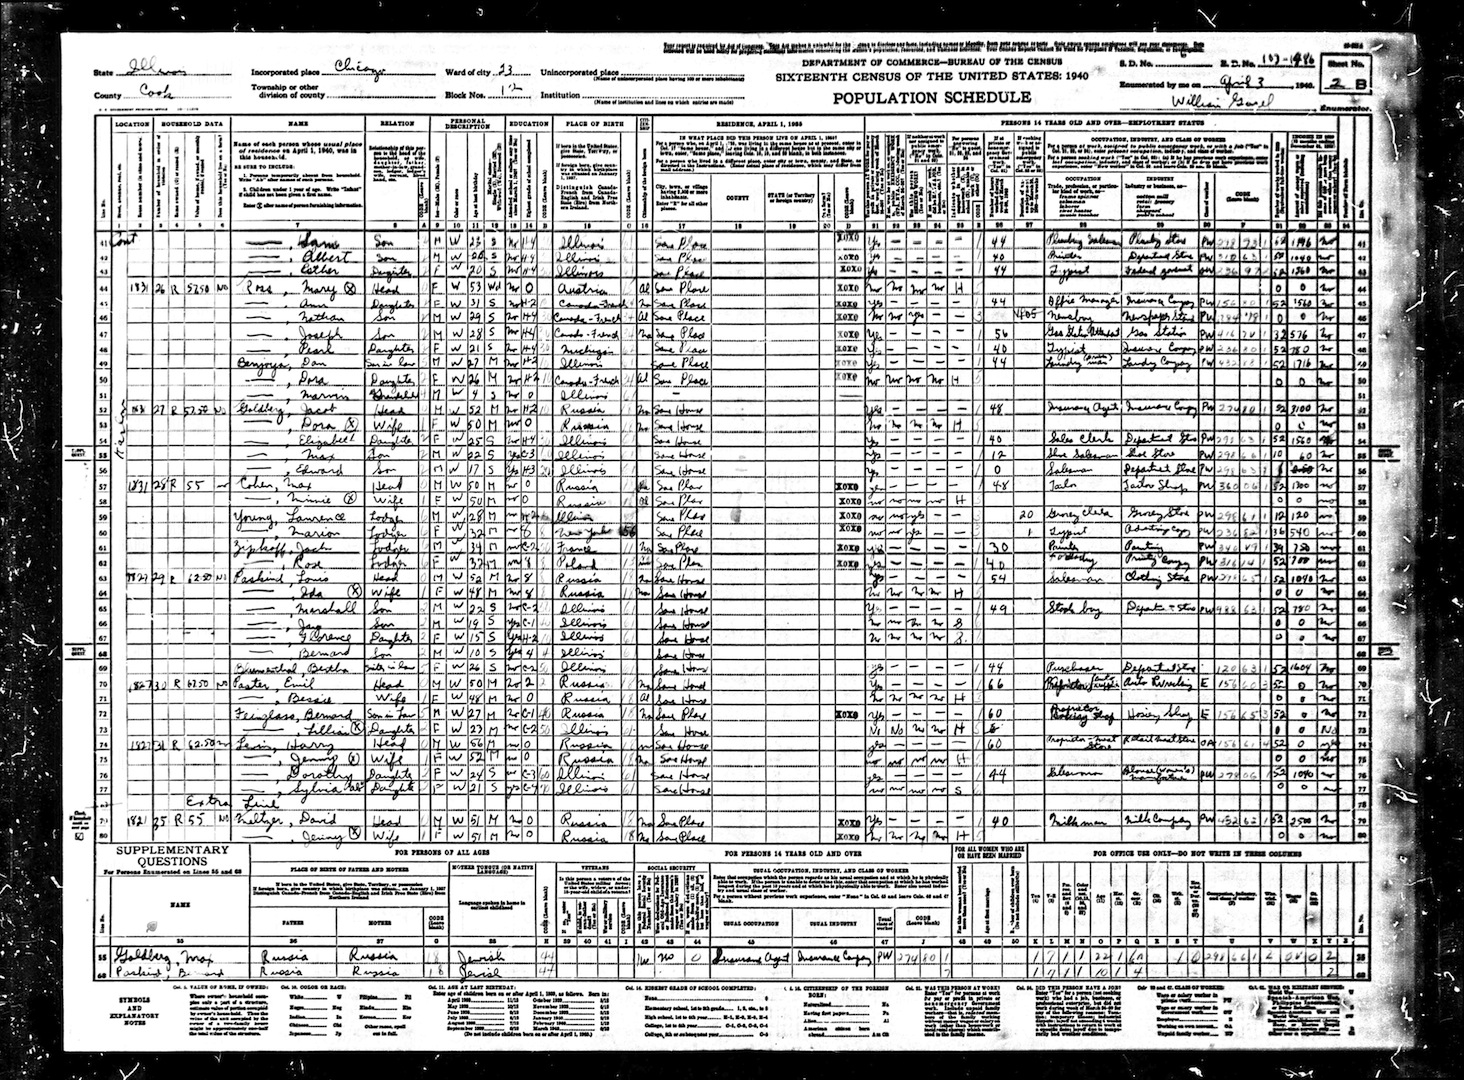 1940 Federal Census (part 2)